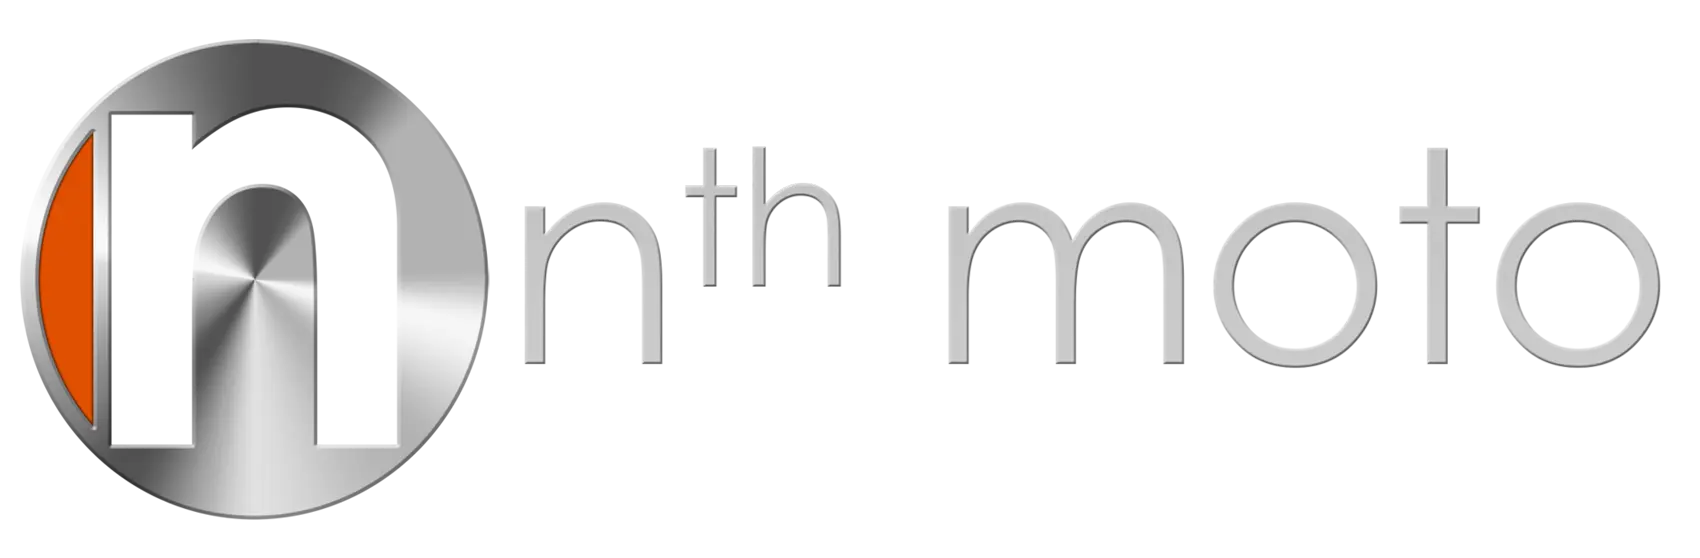 Nth_moto logo